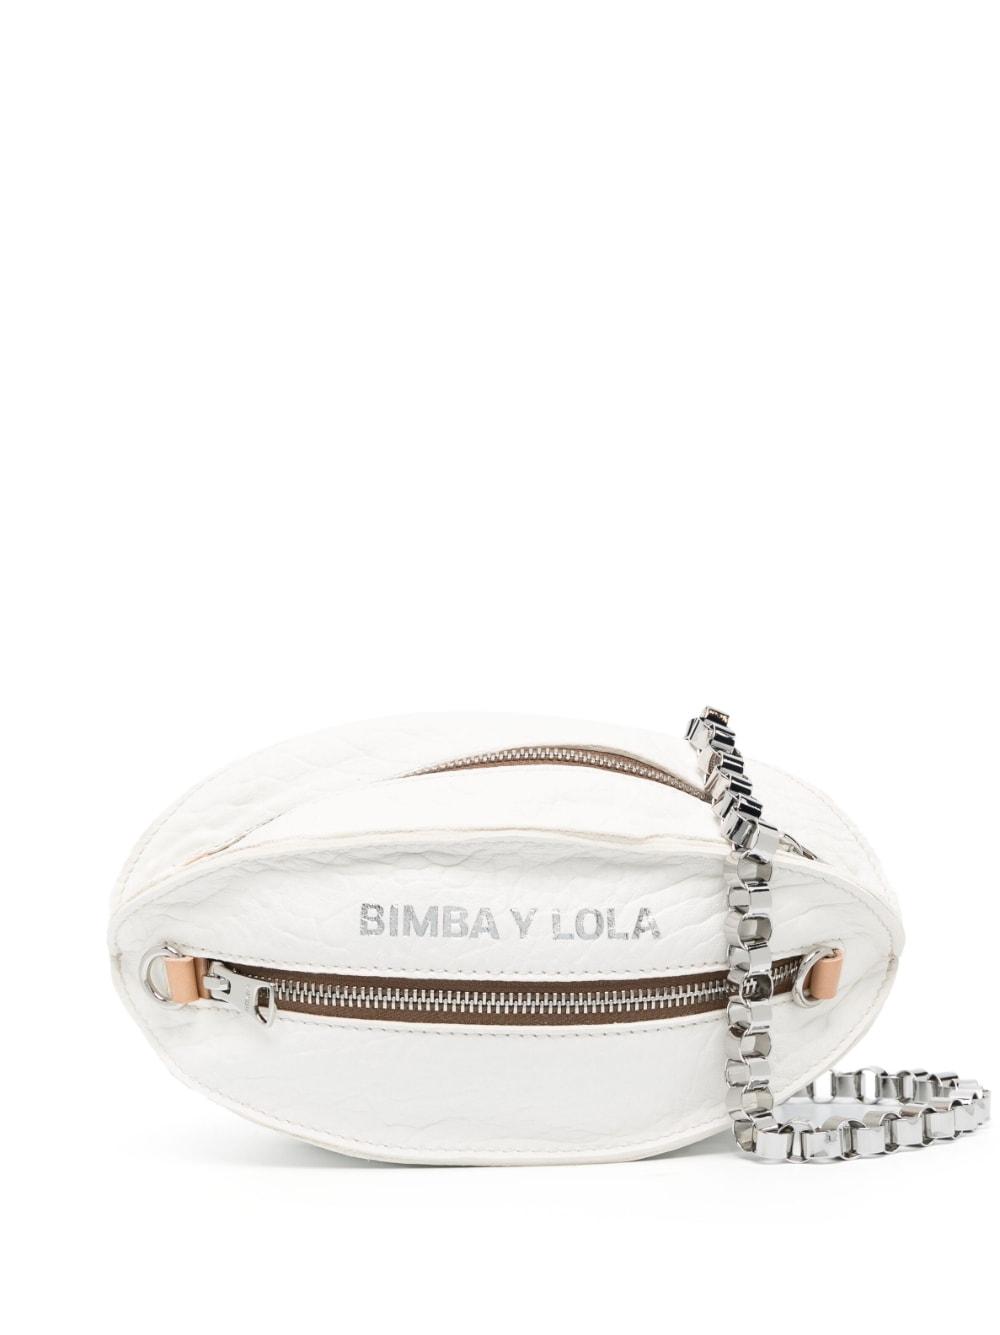 Bimba Y Lola S Pelota Shoulder Bag in White | Lyst Australia